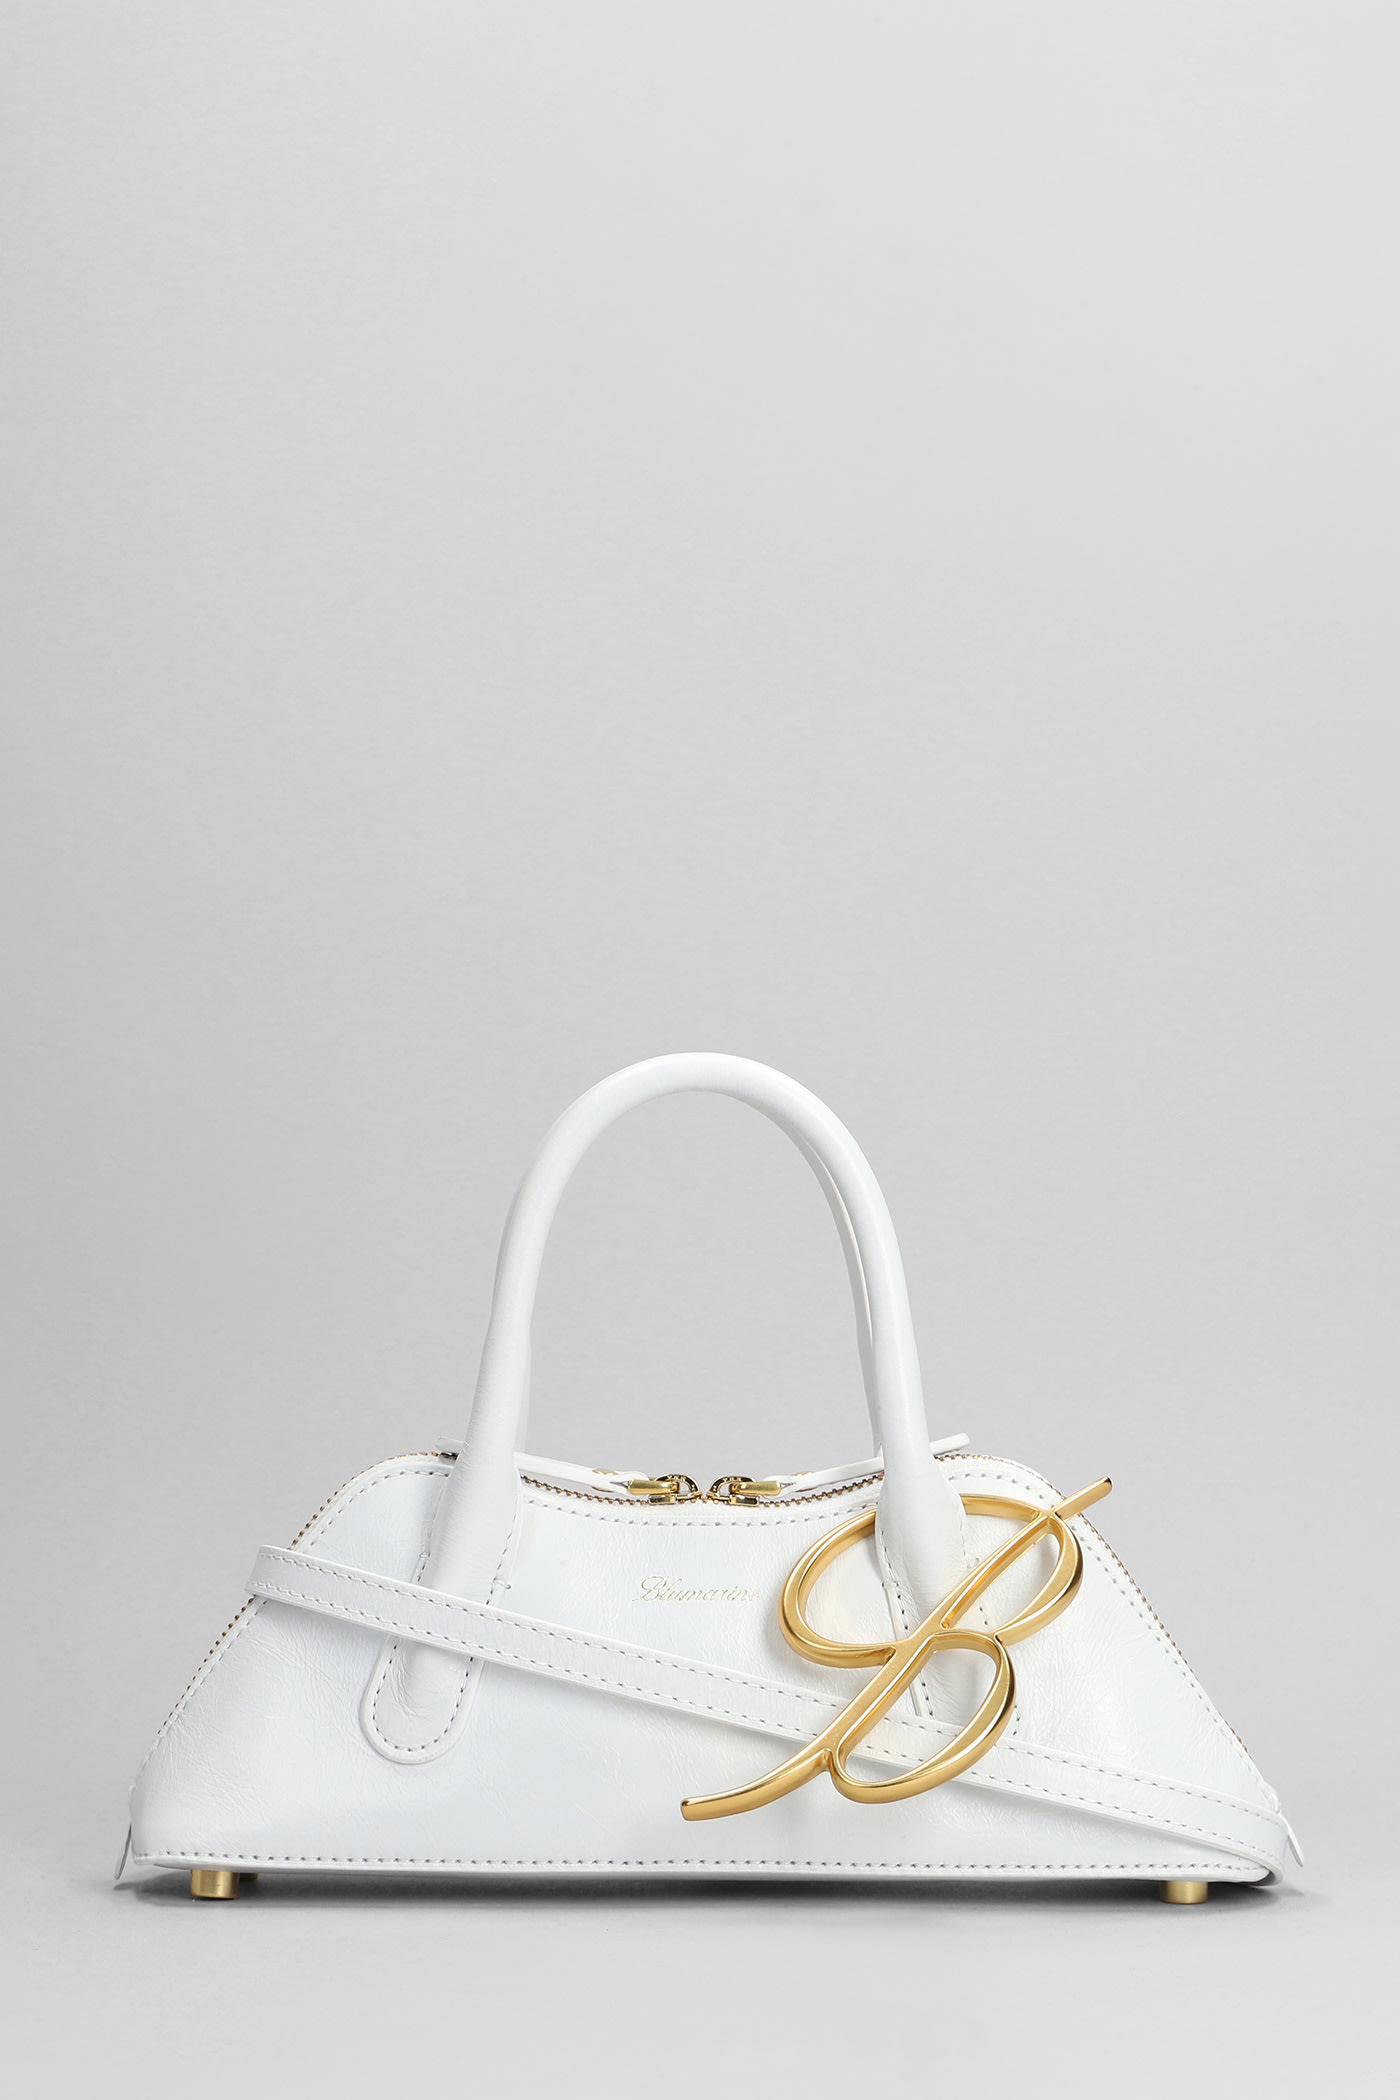 Blumarine Shoulder Bag In White Leather